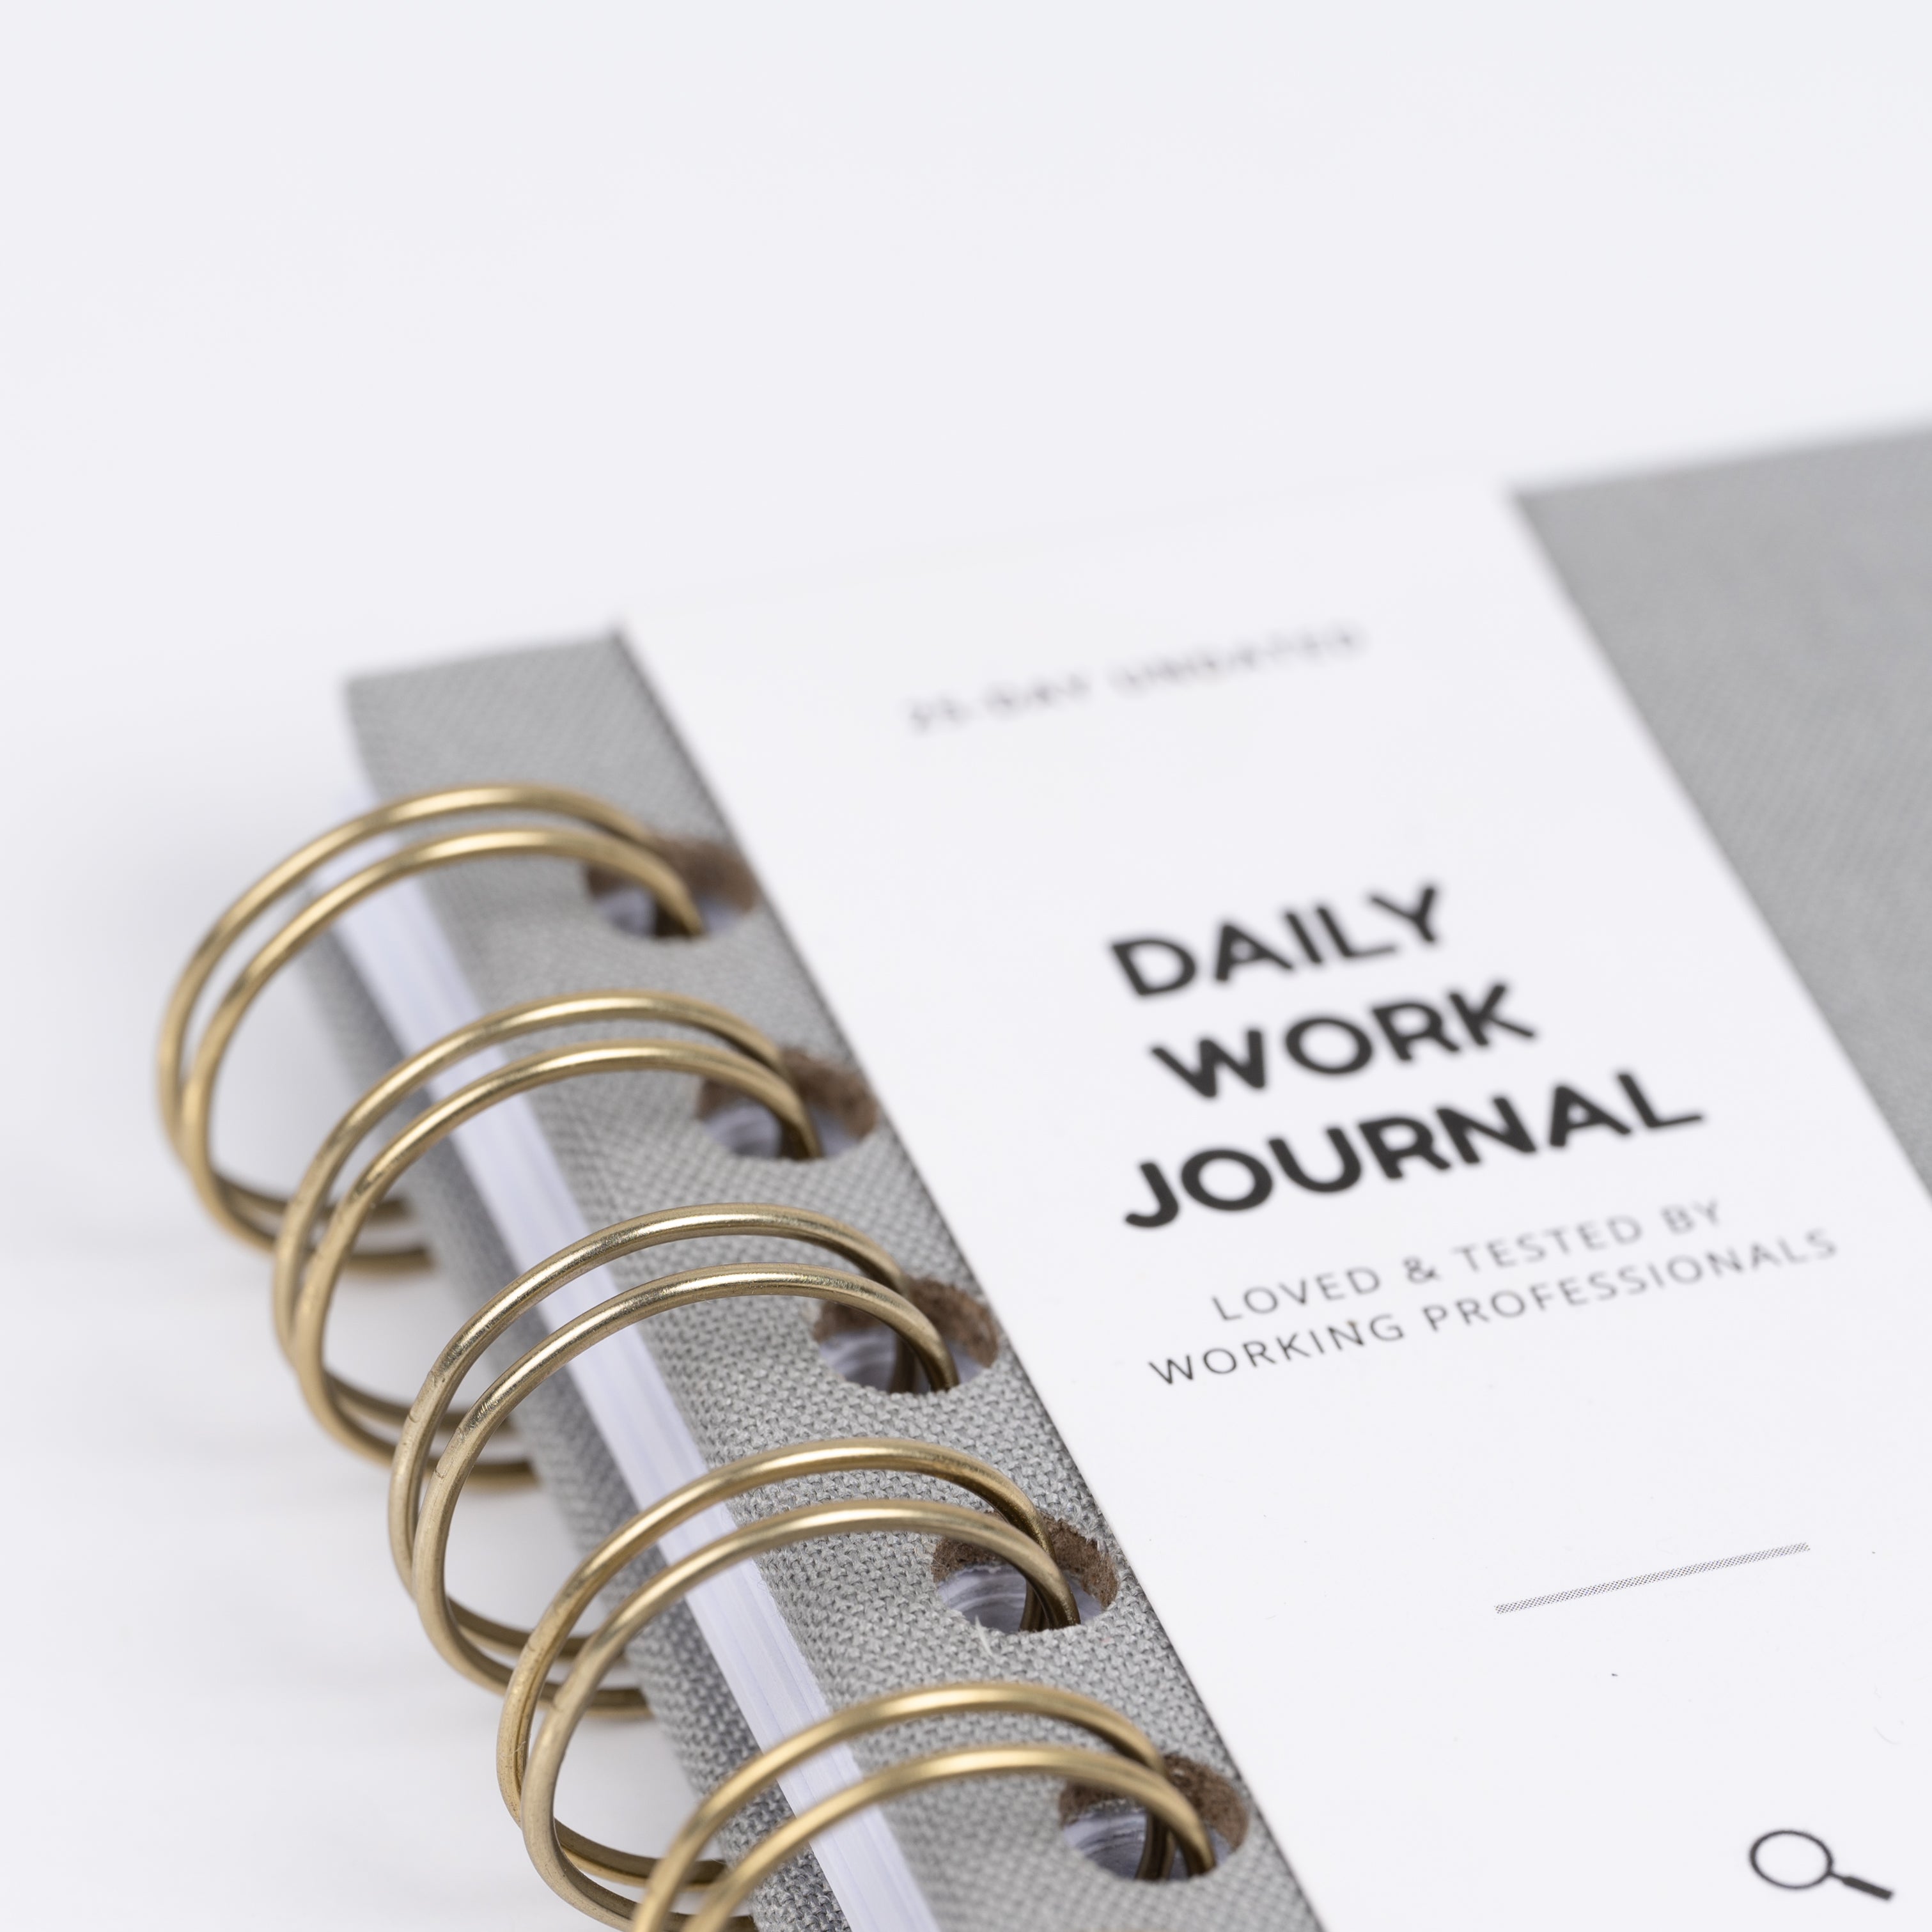 Daily Work Journal - 25 Day Undated